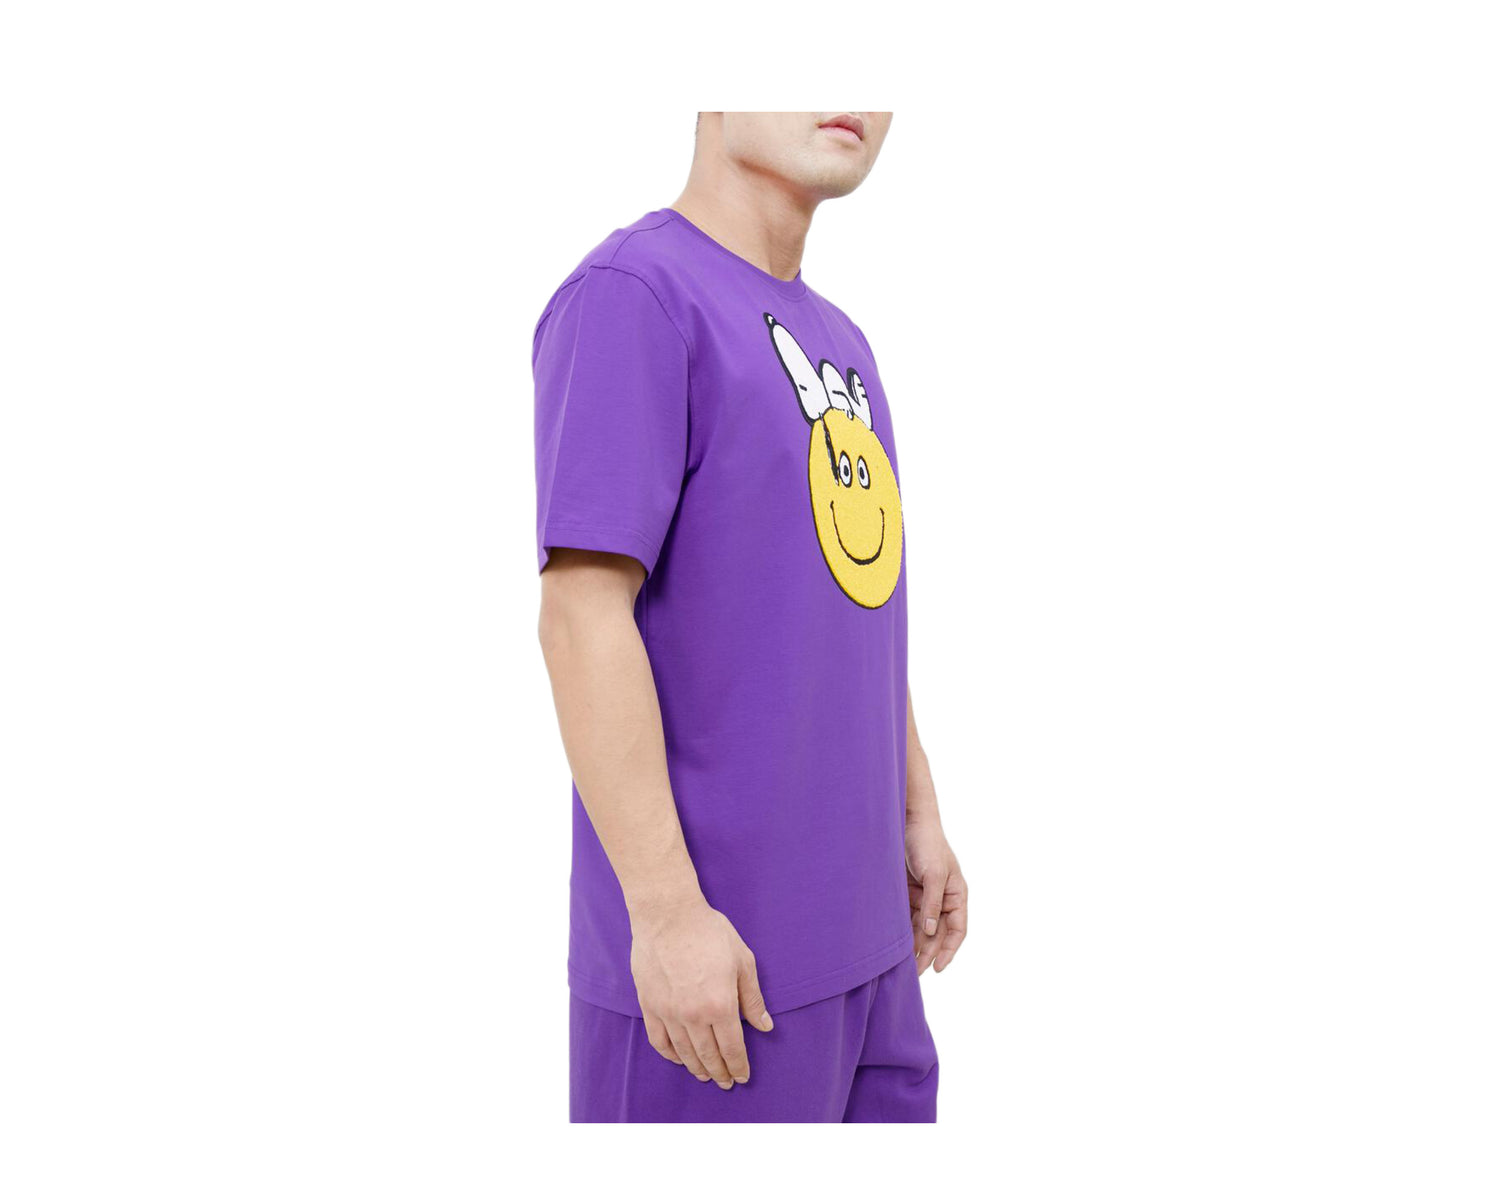 Freeze Max Snoopy Smiley Face Men's Tee Shirt